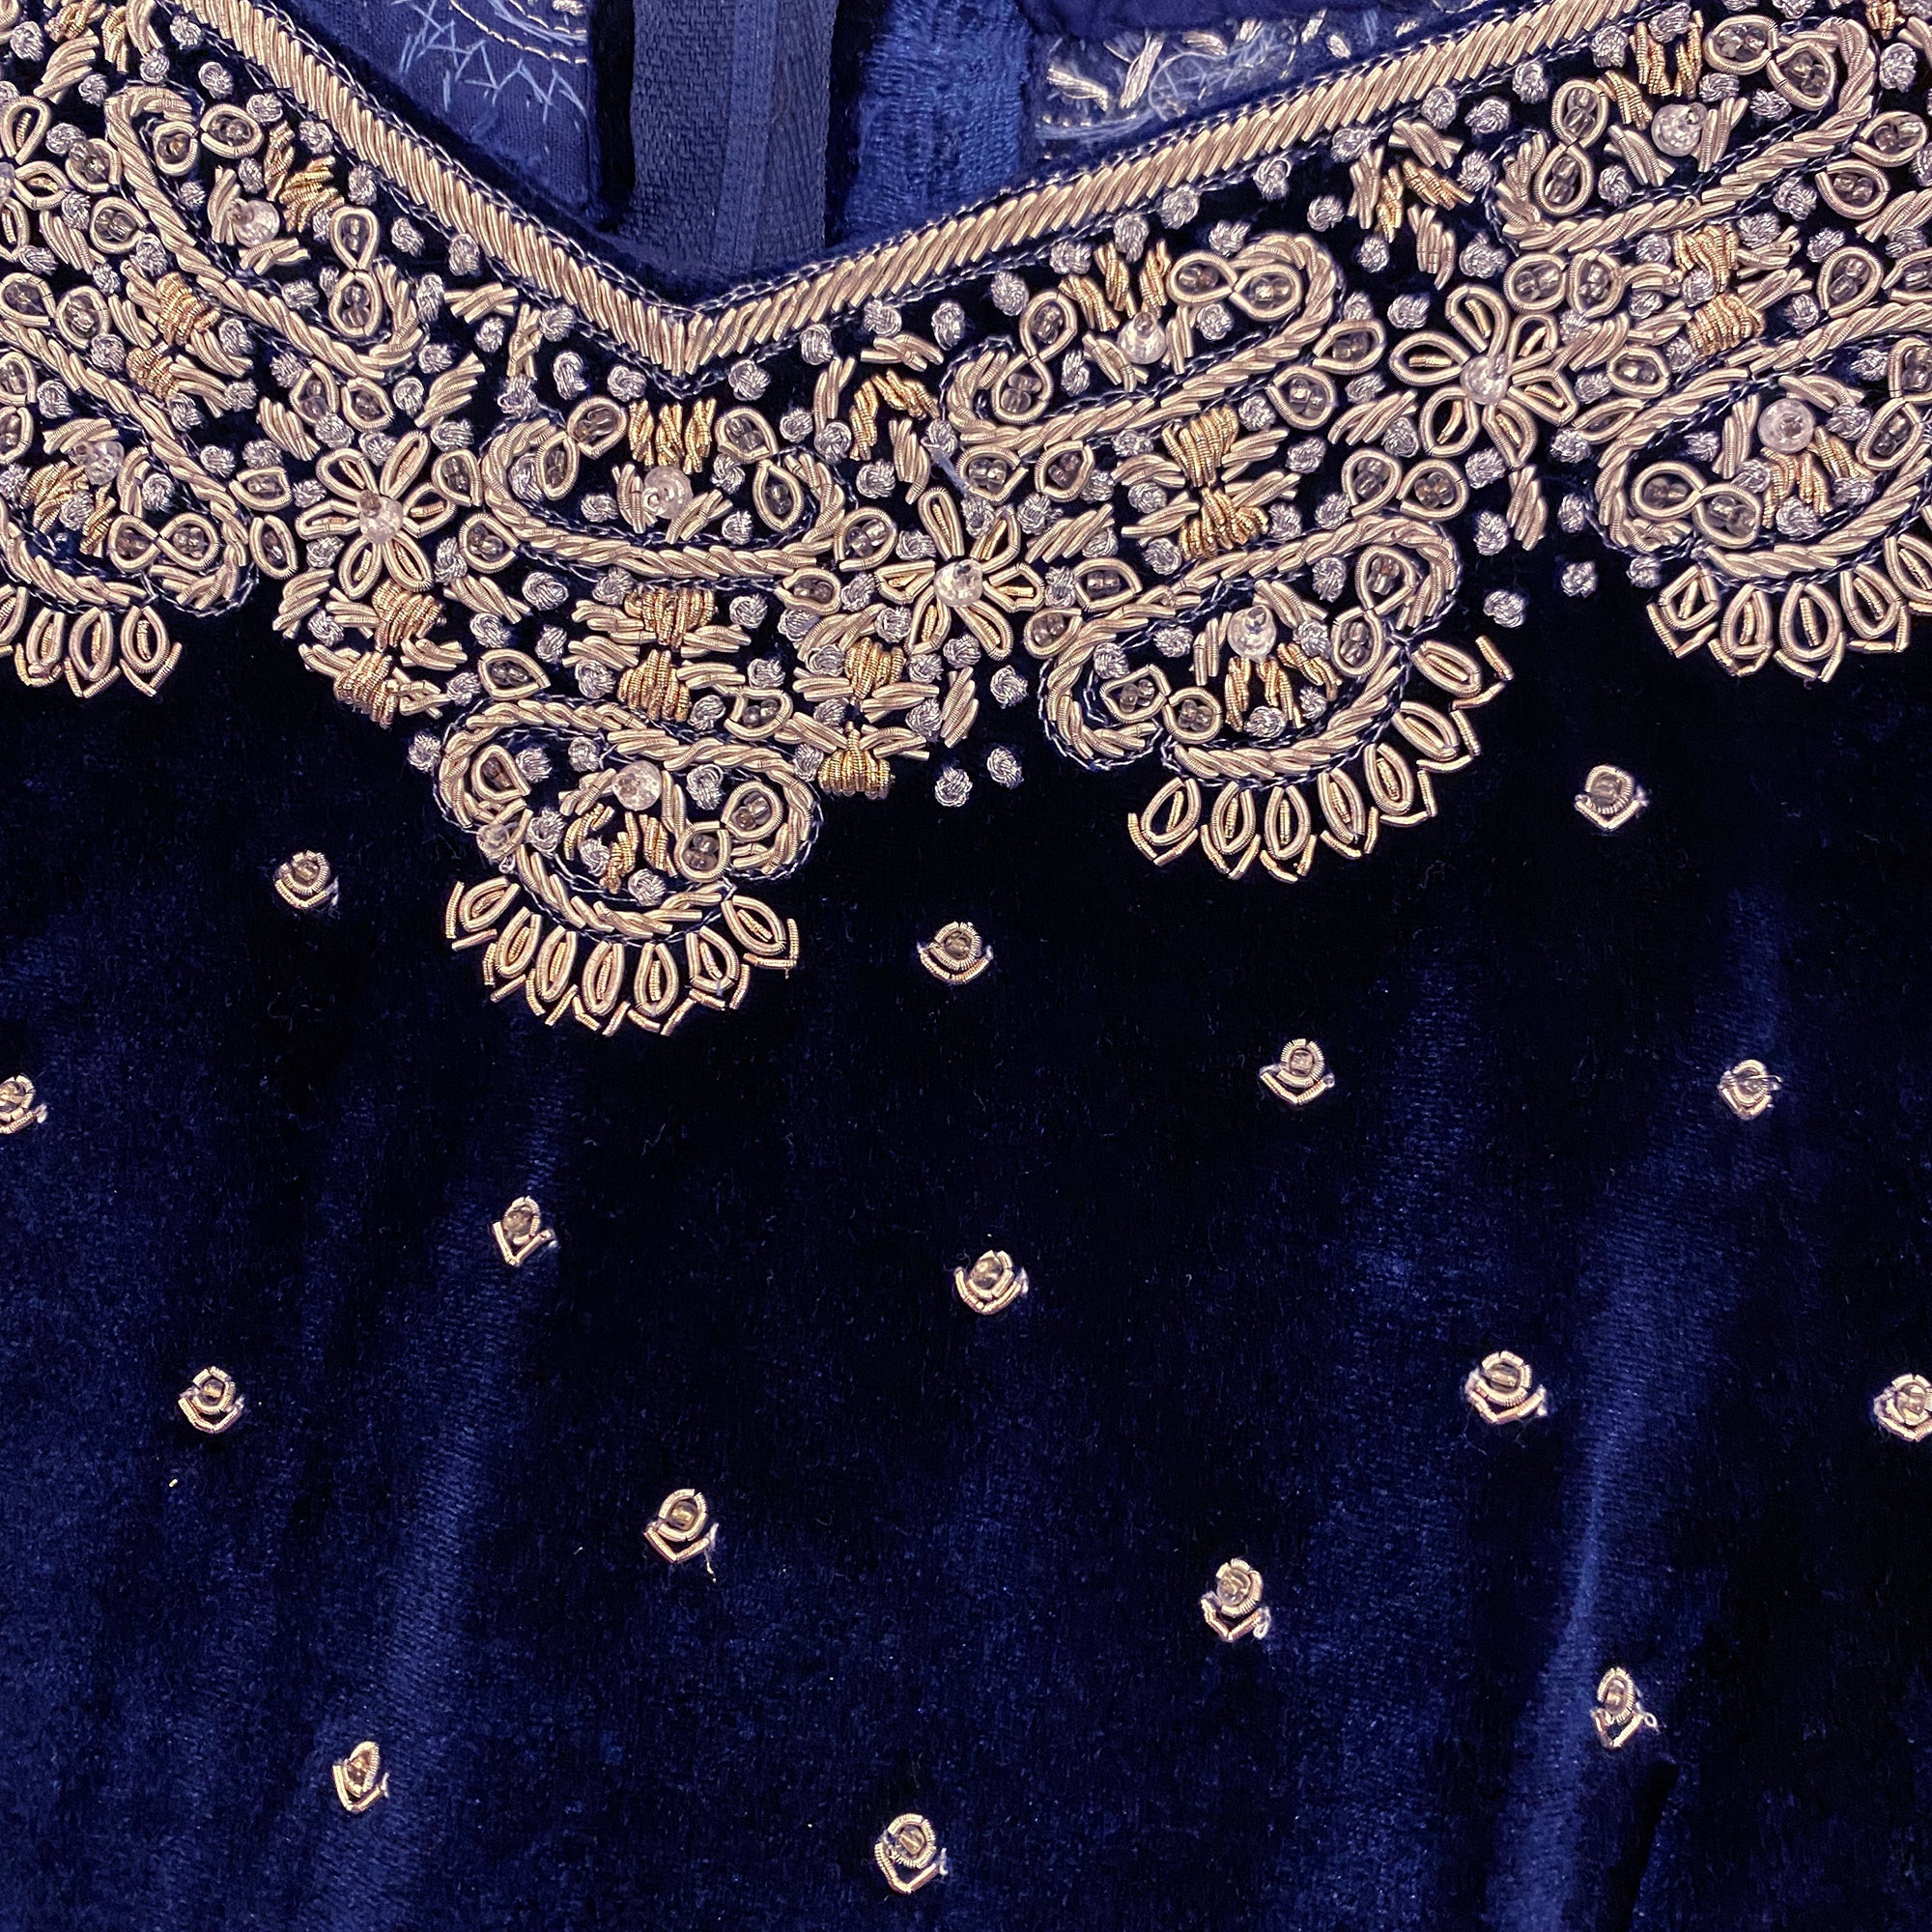 Navy Velvet Top with Silver Zardosi Embroidery - Vintage India NYC